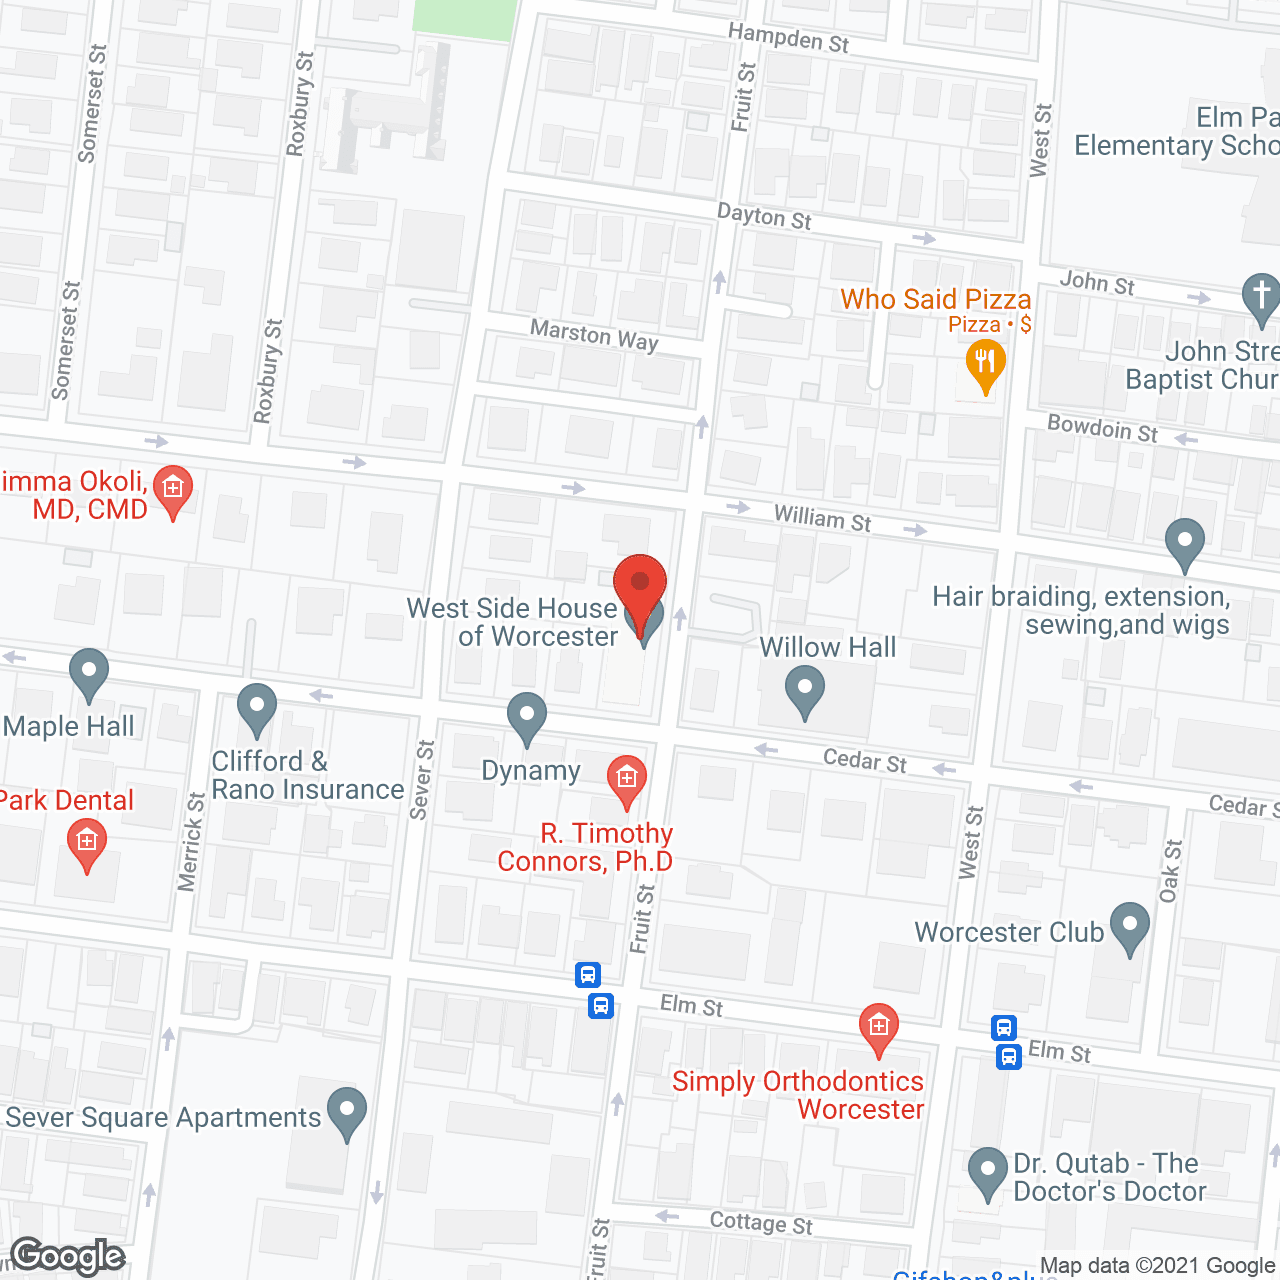 West Side House Nursing Home in google map